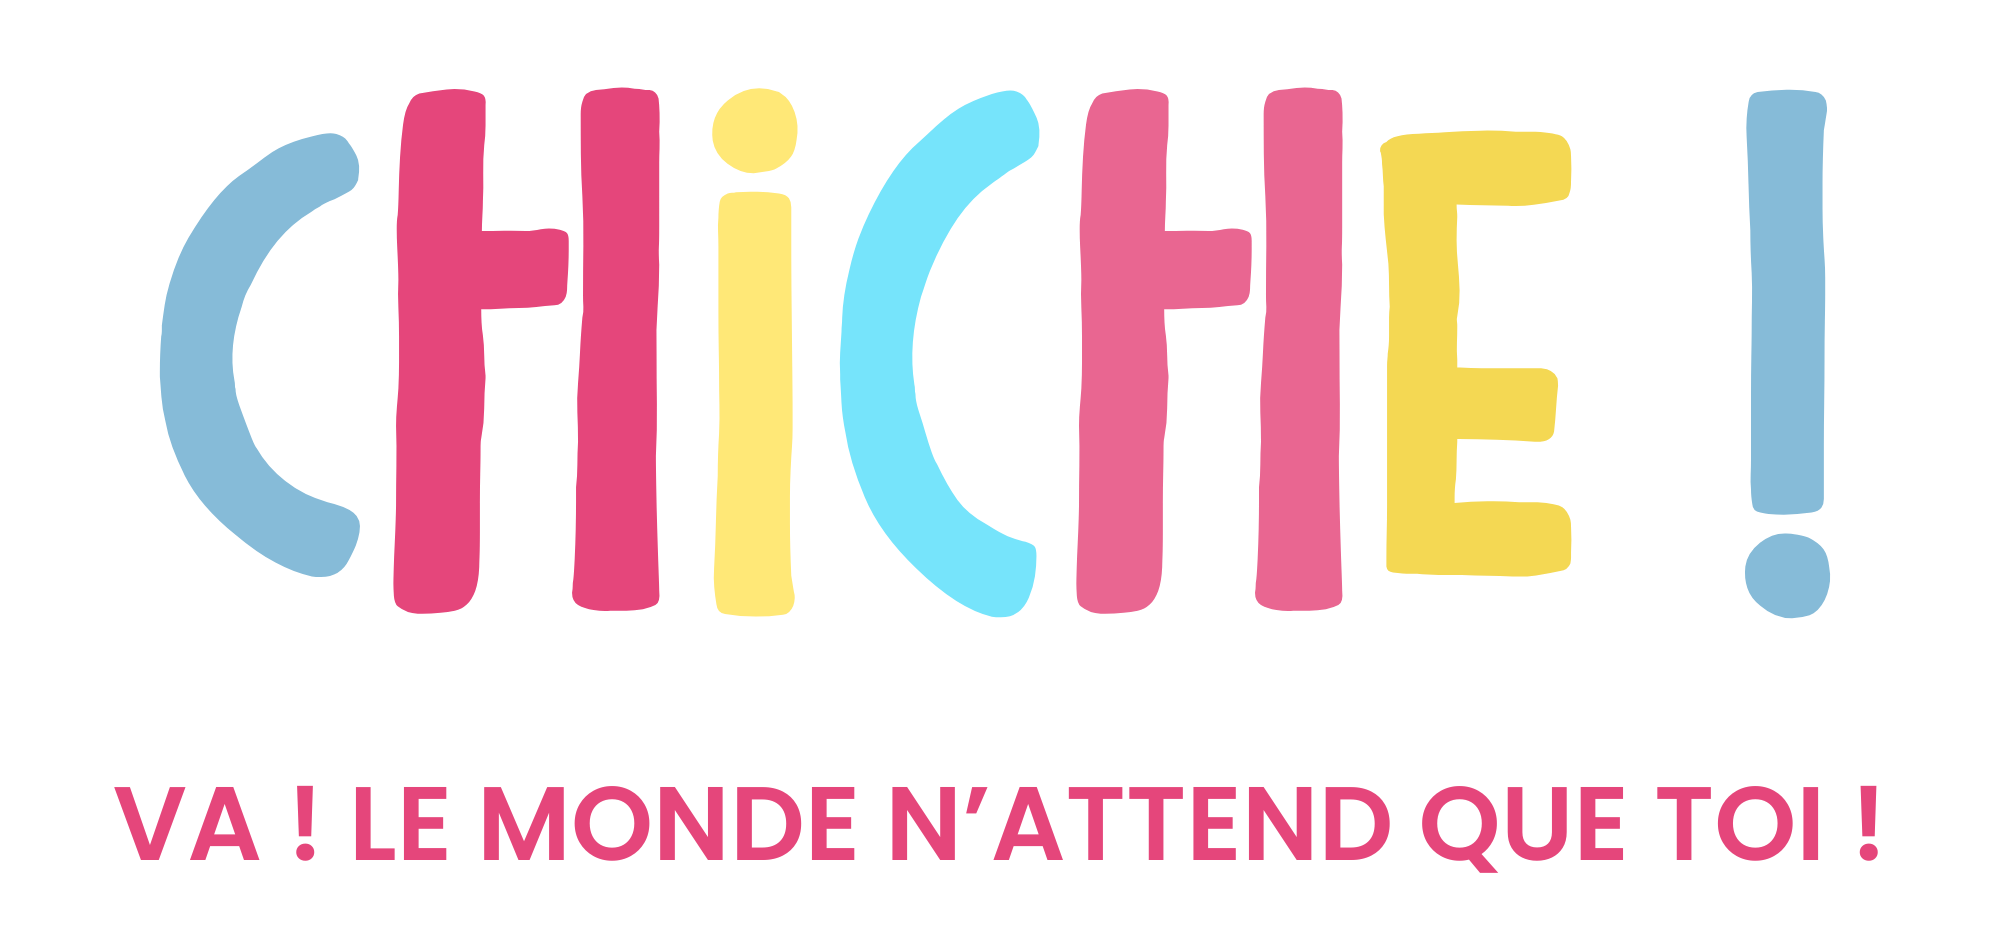 Logo Chiche